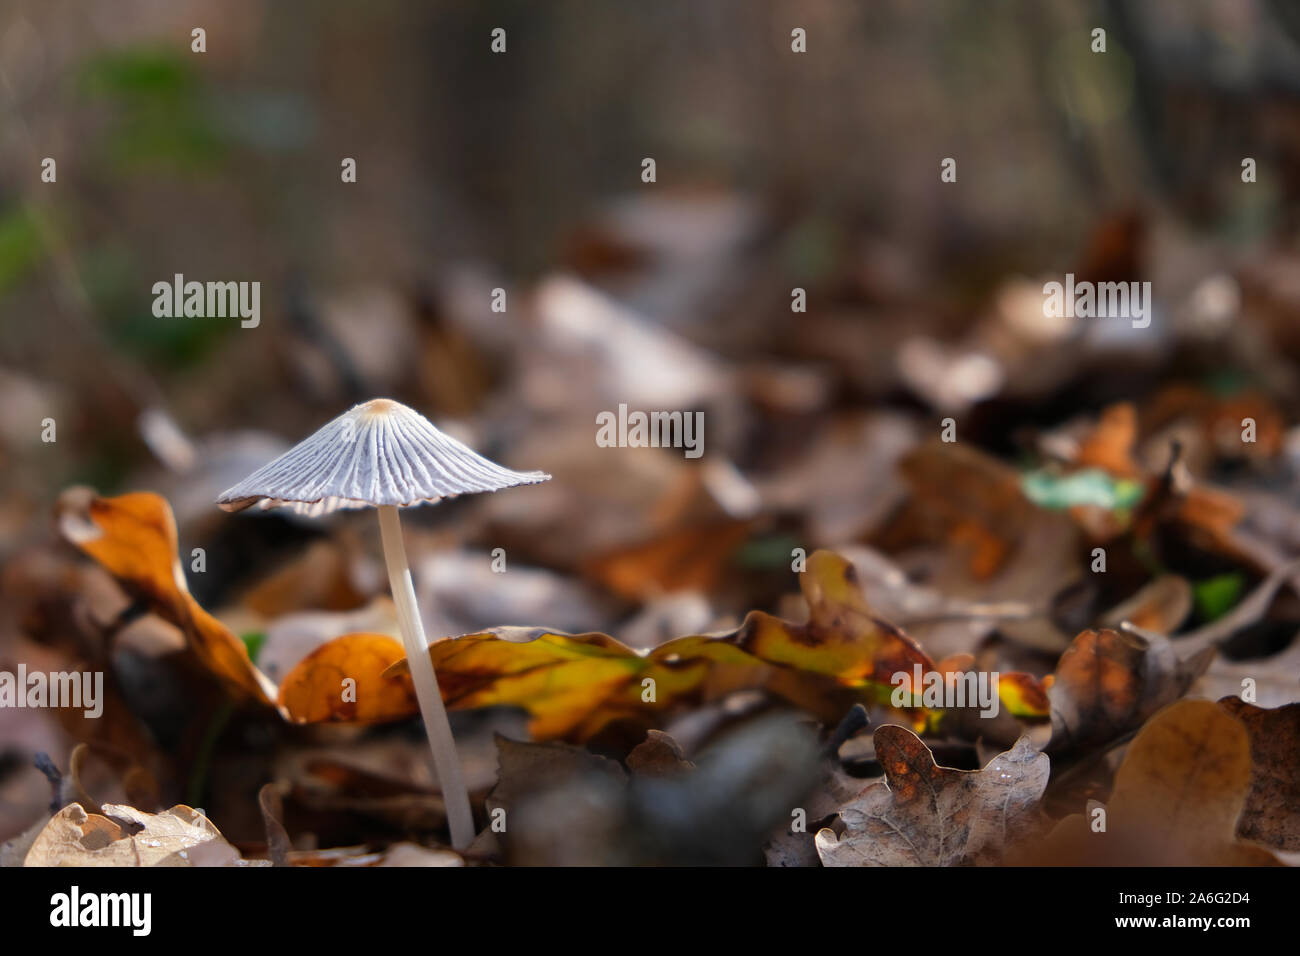 Beautiful close up of a mushroom, growing among dry oak leaves. Forest background. Mushroom macro Stock Photo